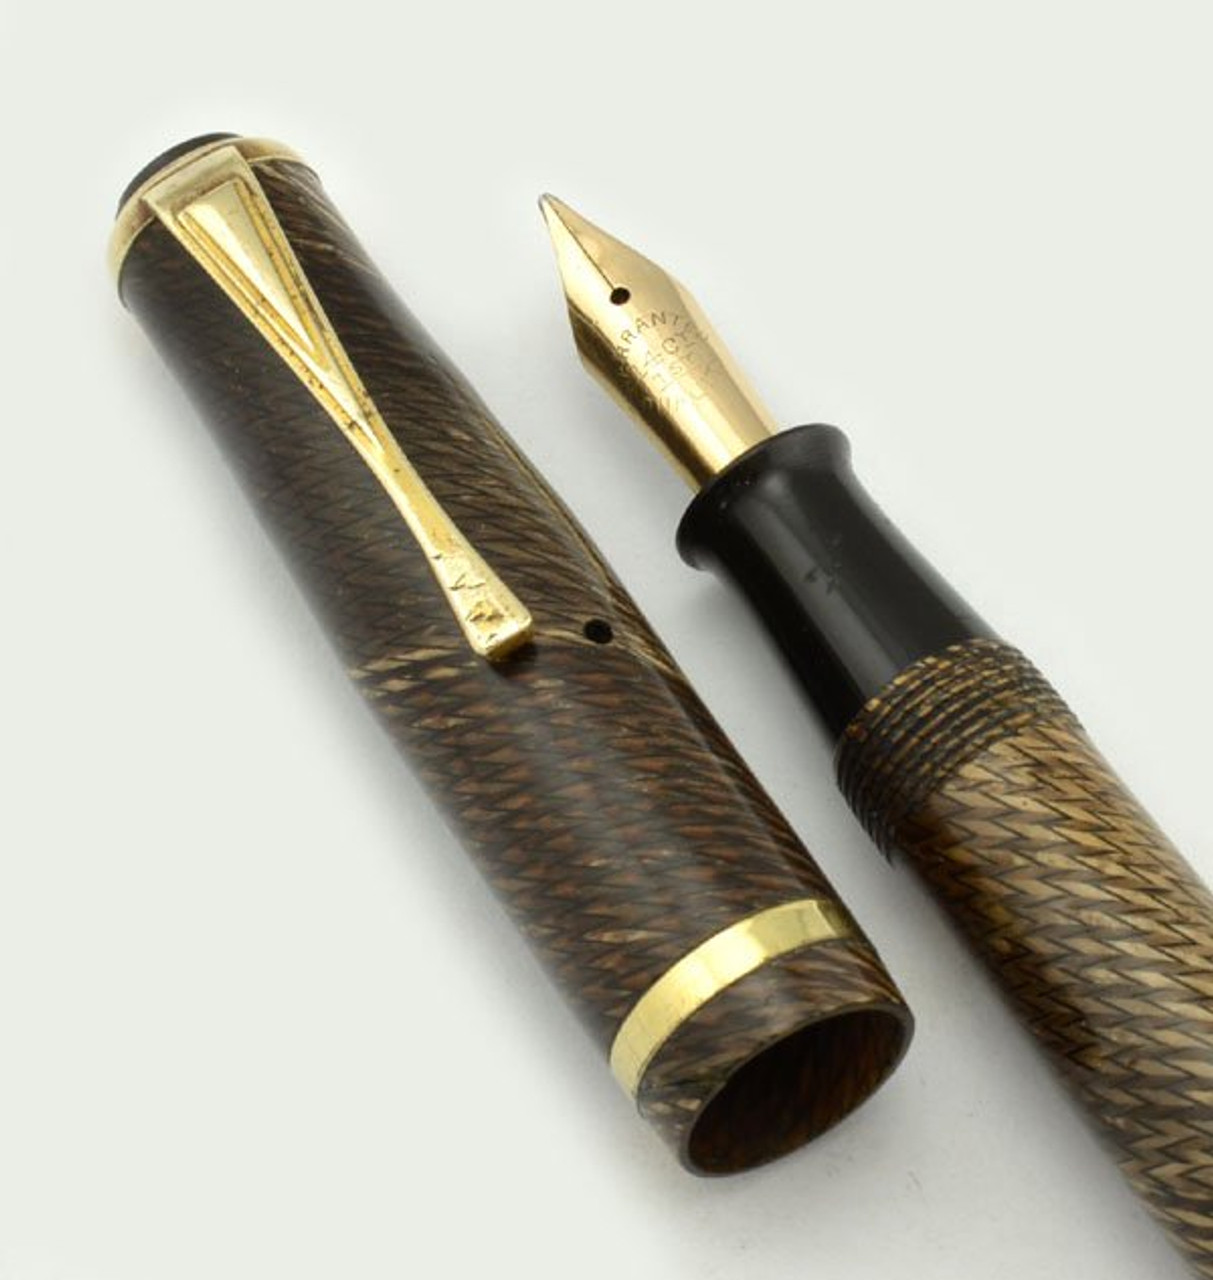 Wyvern 60C Fountain Pen - UK, Snakeskin, Lever Fill, 14k Semi-Flex Medium (Very Nice, Restored)